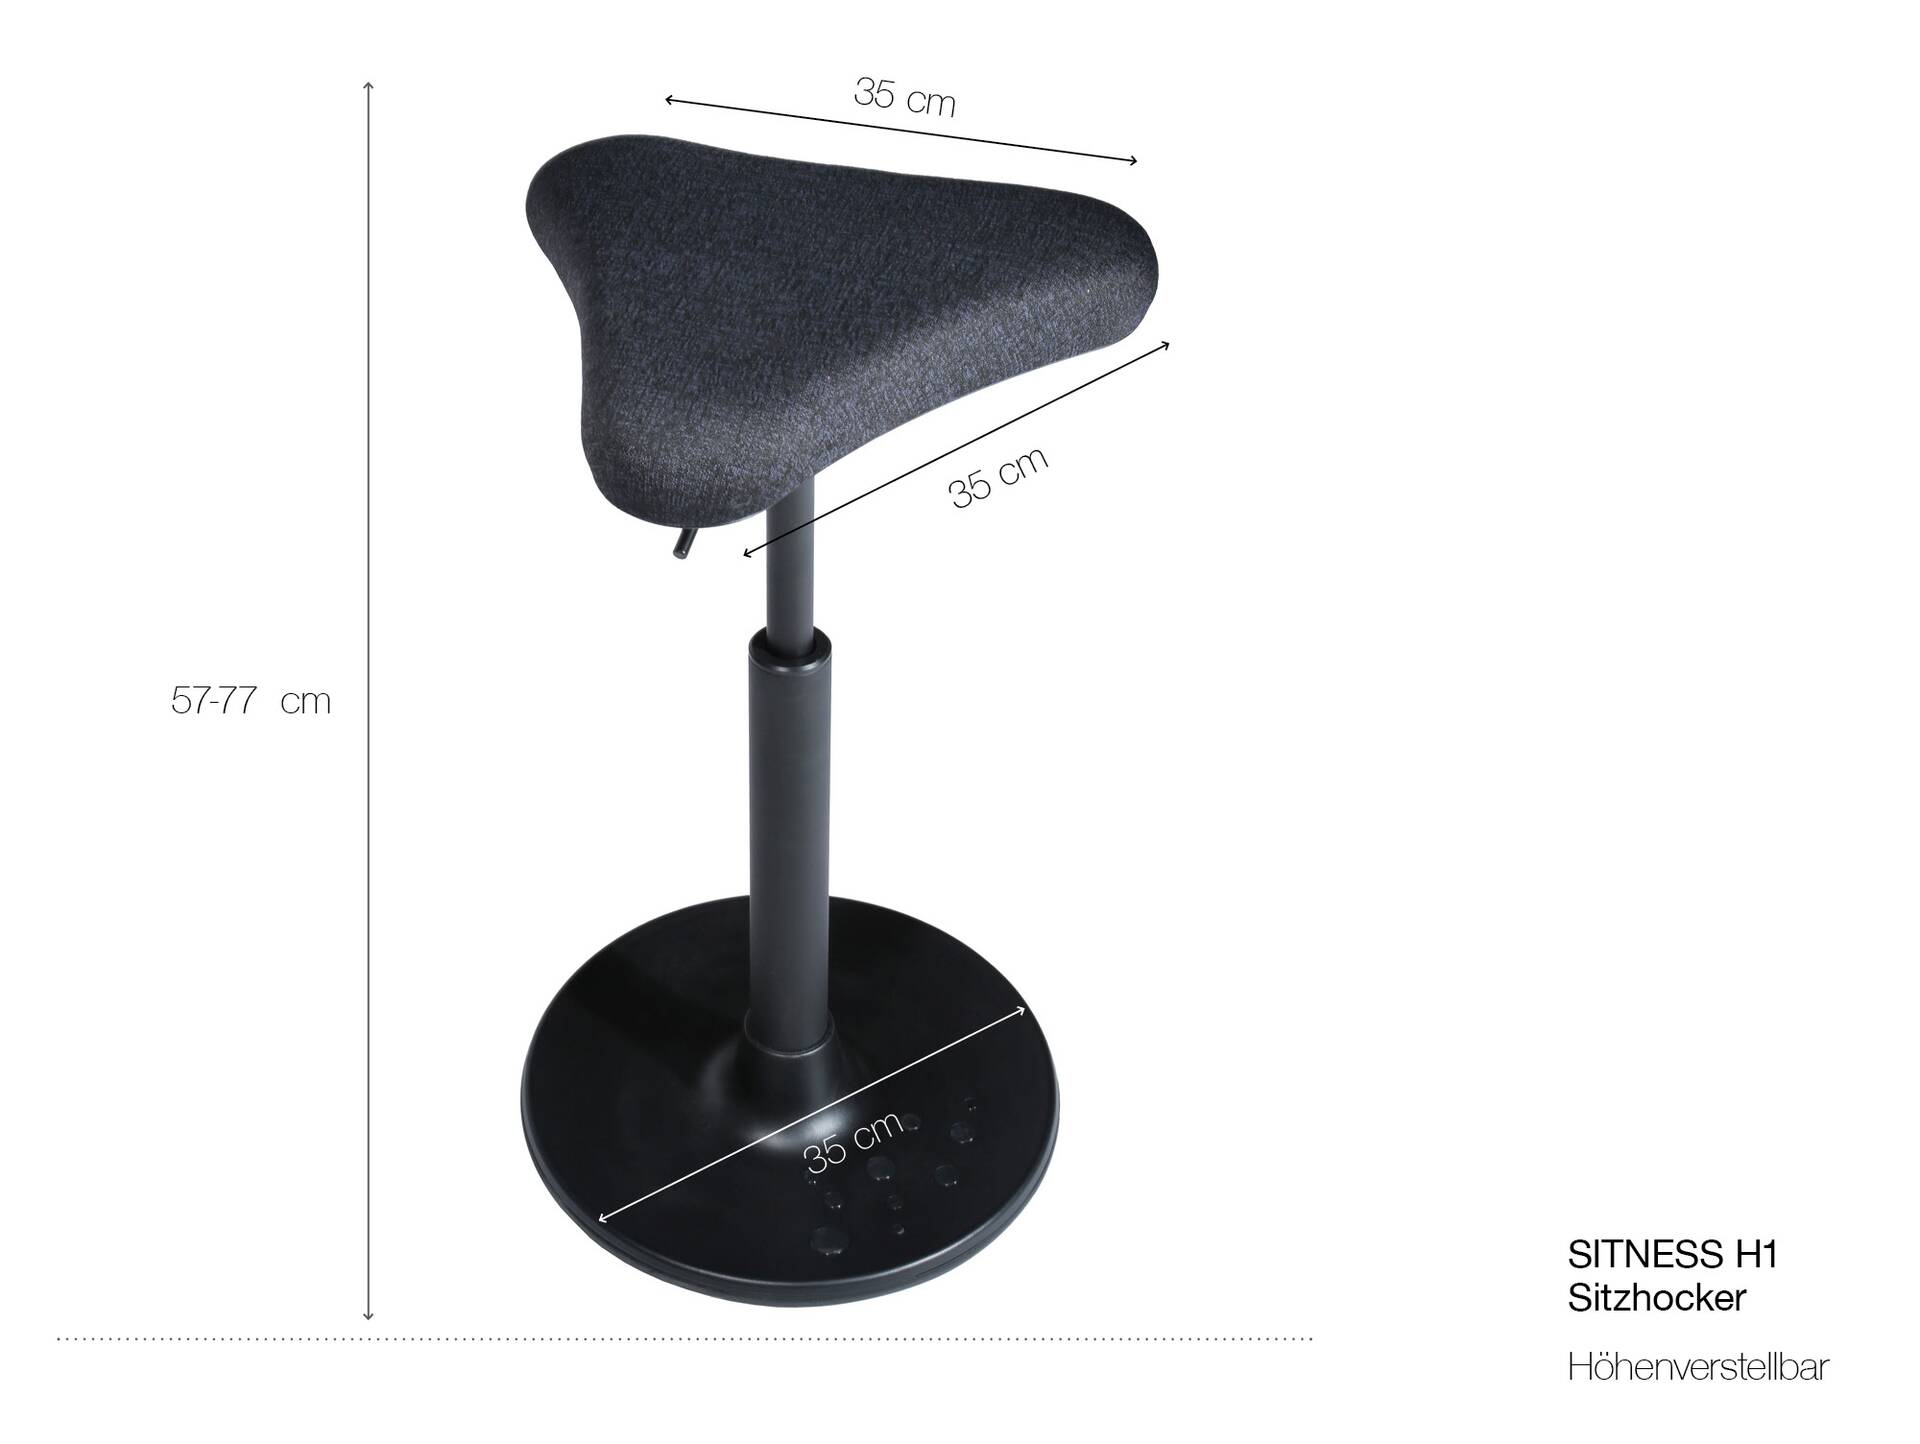 SITNESS H1 Sitzhocker / Stehhilfe, Material Stoff/Kunststoff 